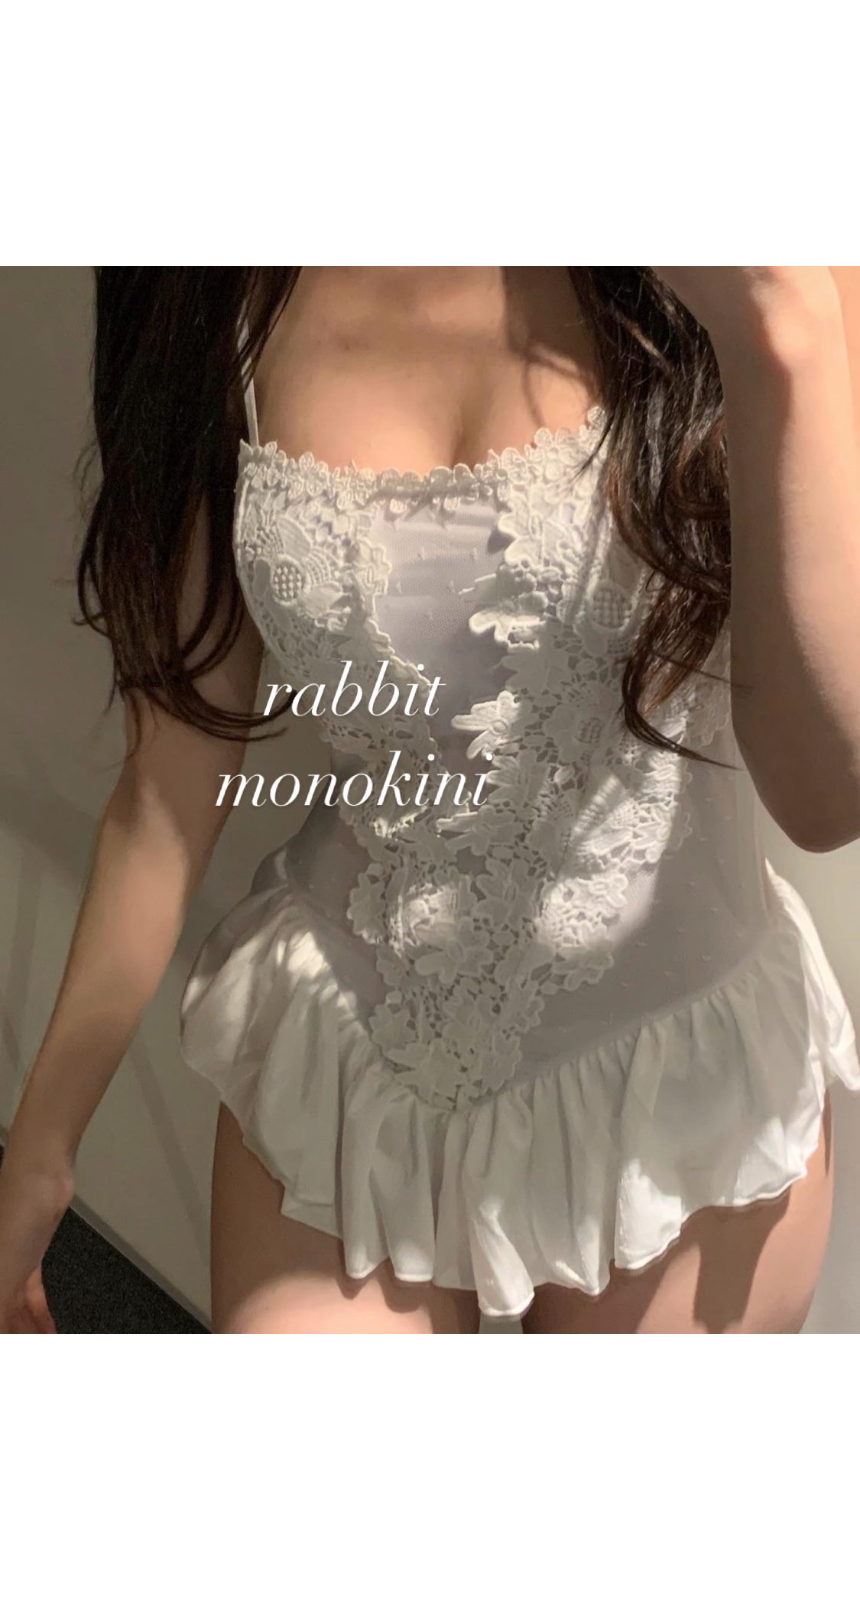 Rabbit Monokini